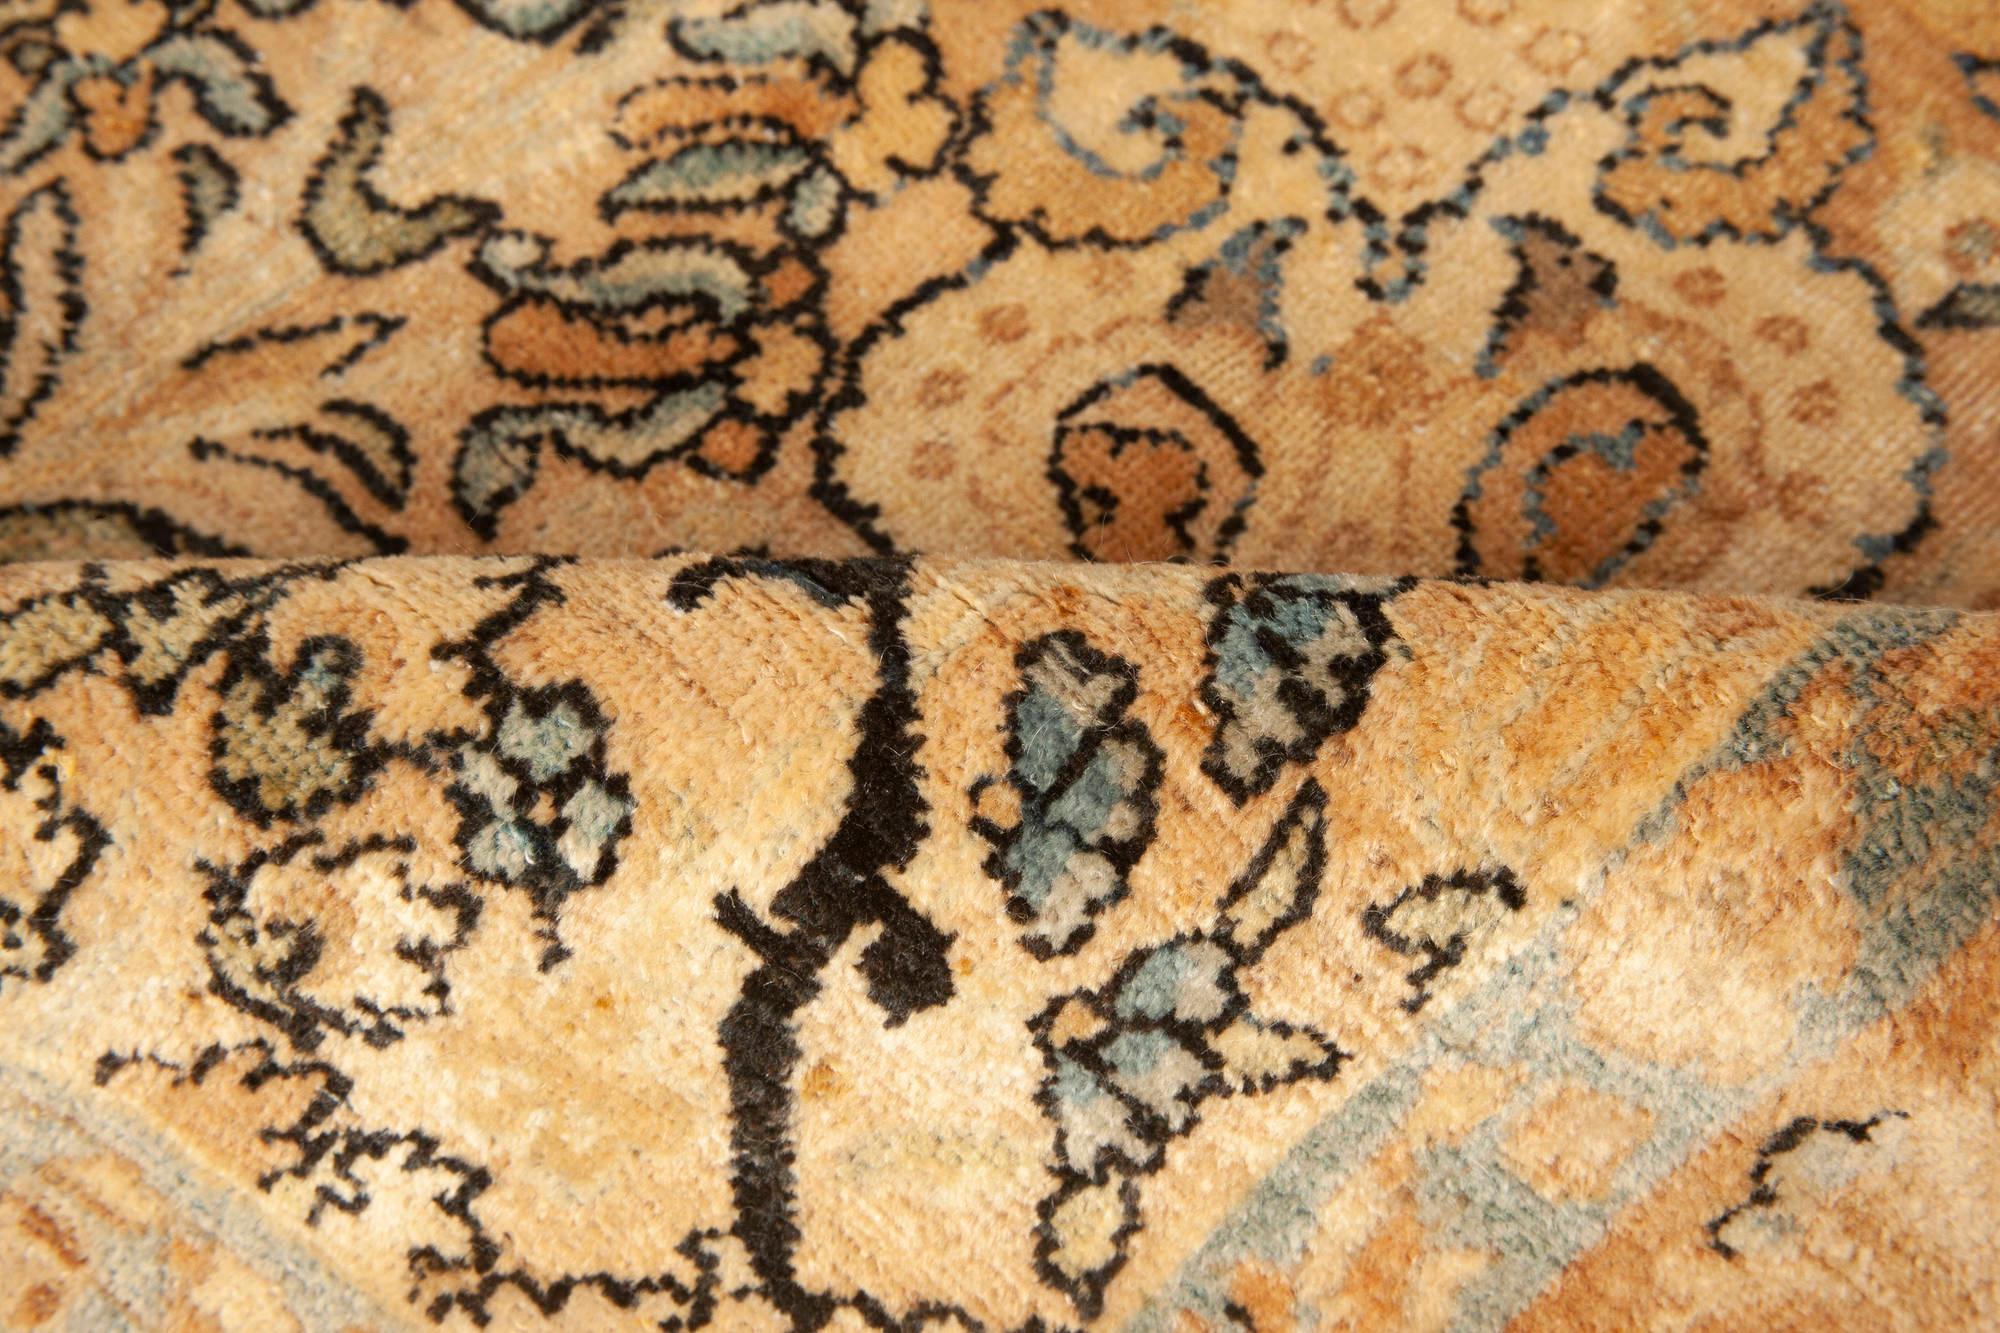 Antique Persian Kirman Handmade Wool Rug
Size: 9'10